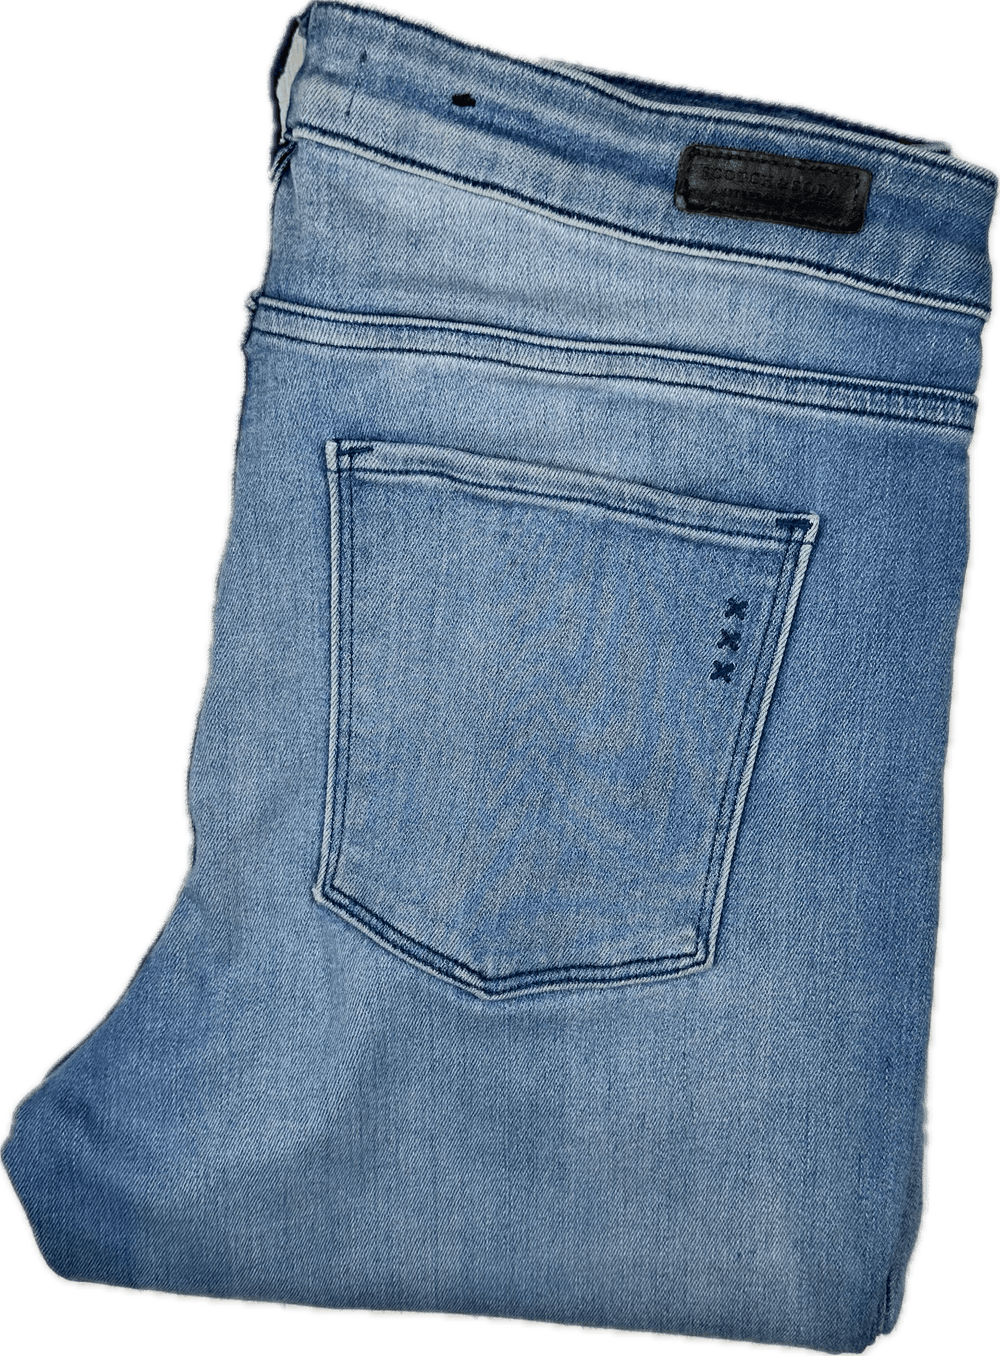 Scotch & Soda 'La Bohemienne' Mid Rise Skinny Jeans - Size 32 - Jean Pool